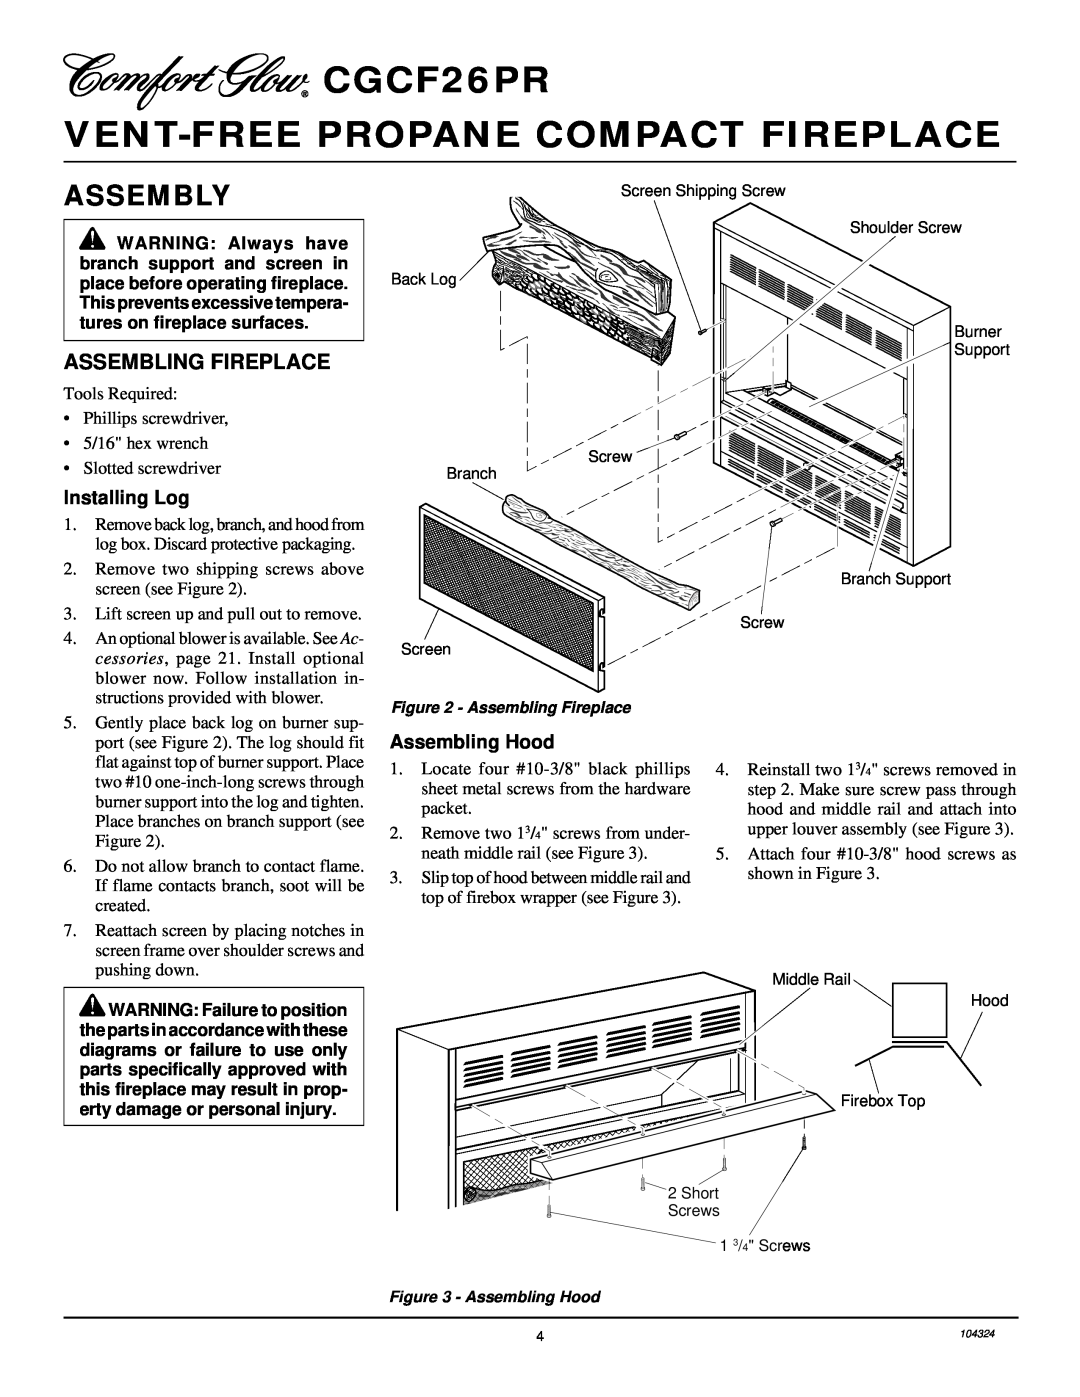 Desa installation manual Assembly, Assembling Fireplace, CGCF26PR VENT-FREEPROPANE COMPACT FIREPLACE 